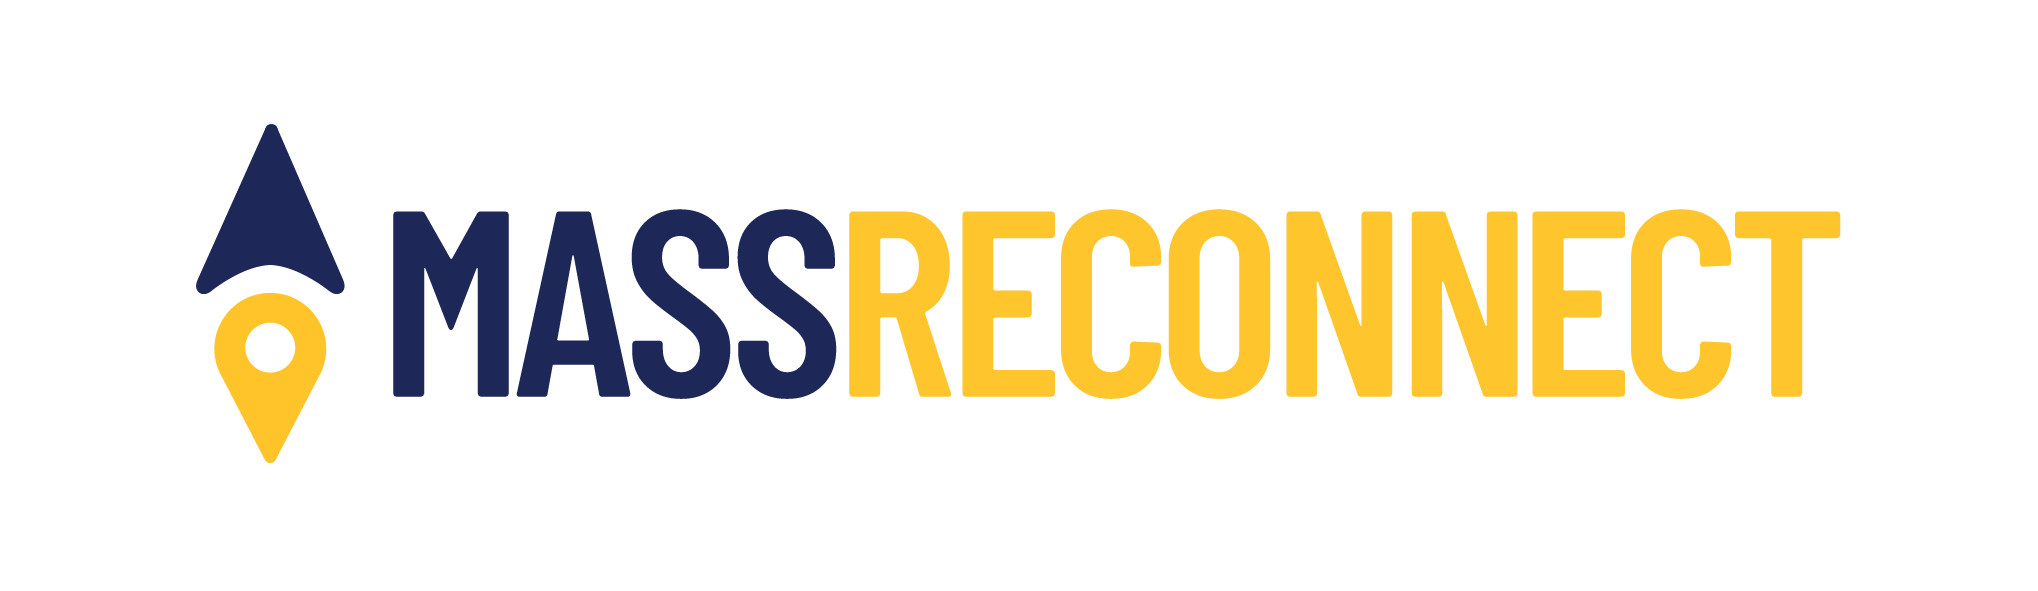 MassReconnect Logo